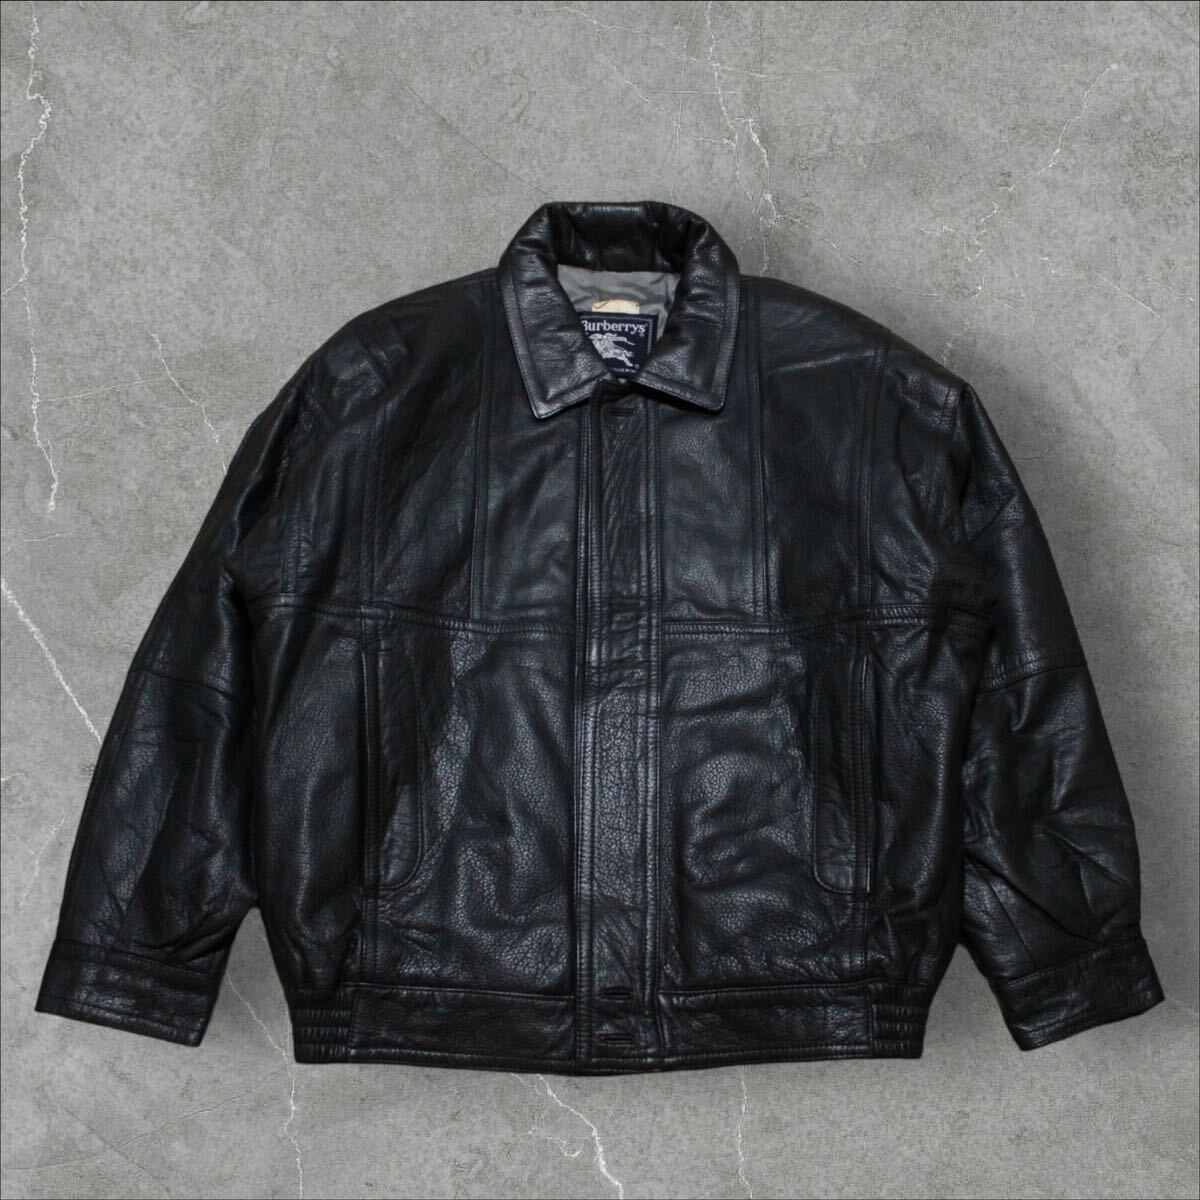 16 Burberry Burberry leather jacket original leather jacket Single Rider's black black outer large size 3L 54